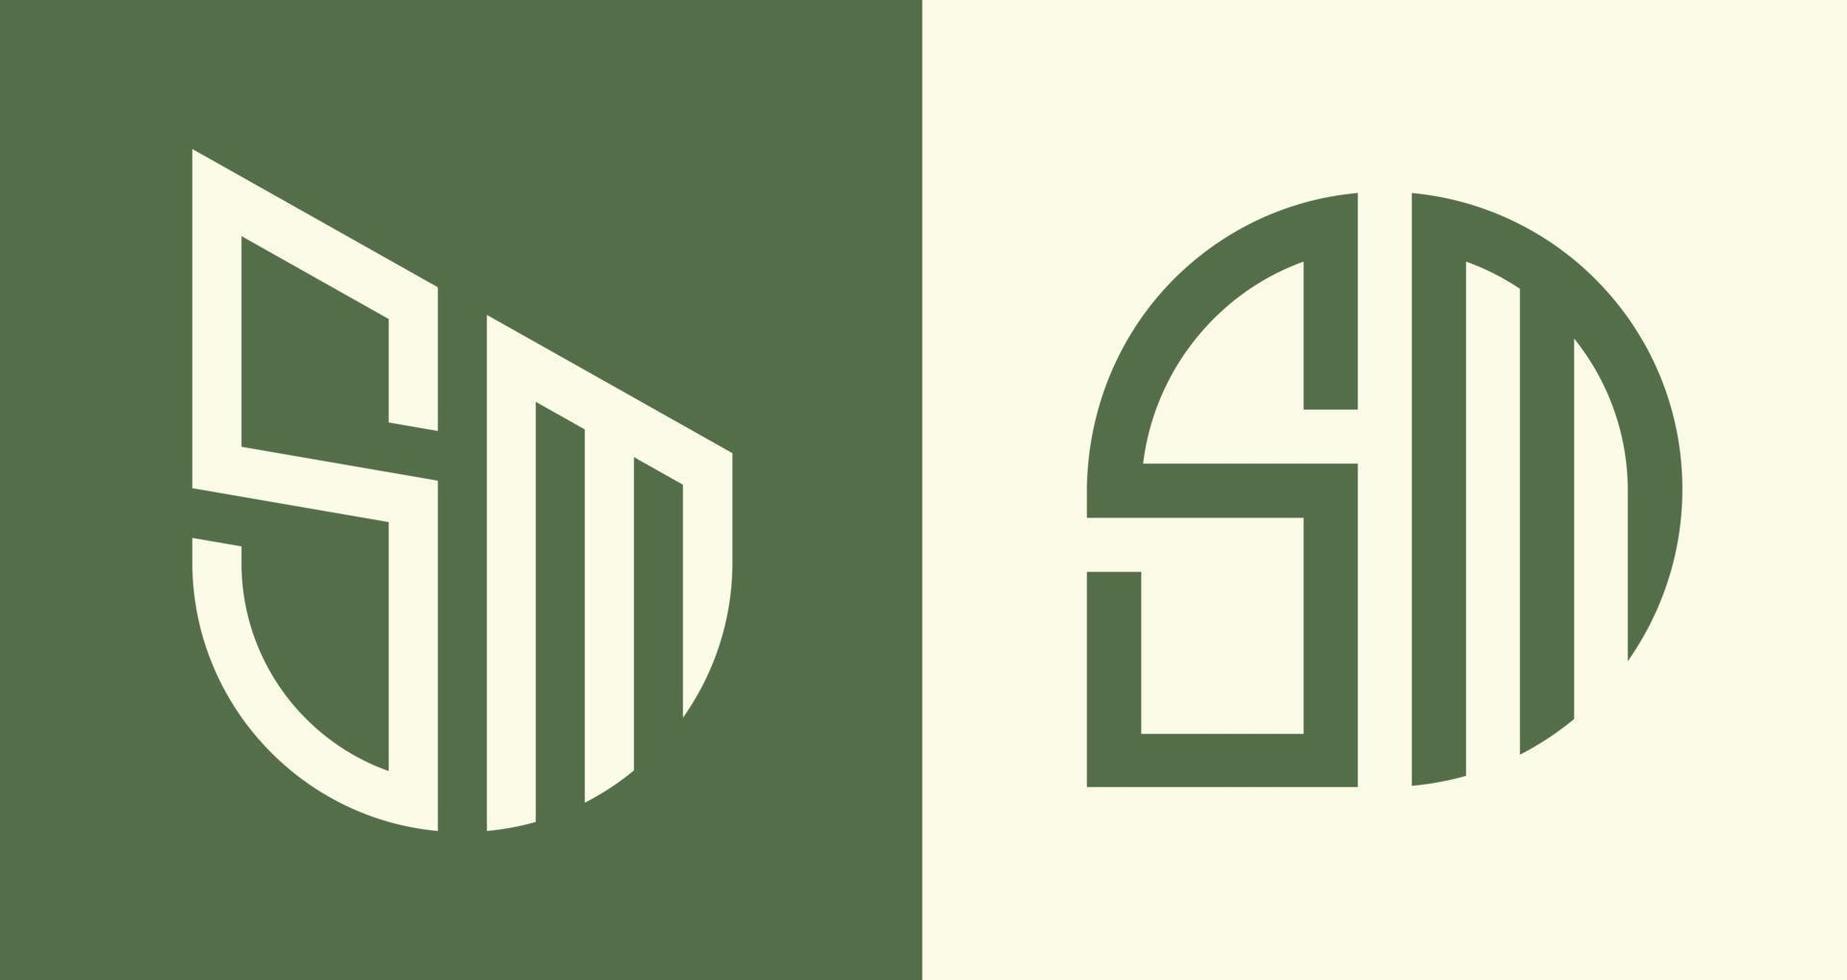 kreative einfache anfangsbuchstaben sm-logo-designs paket. vektor